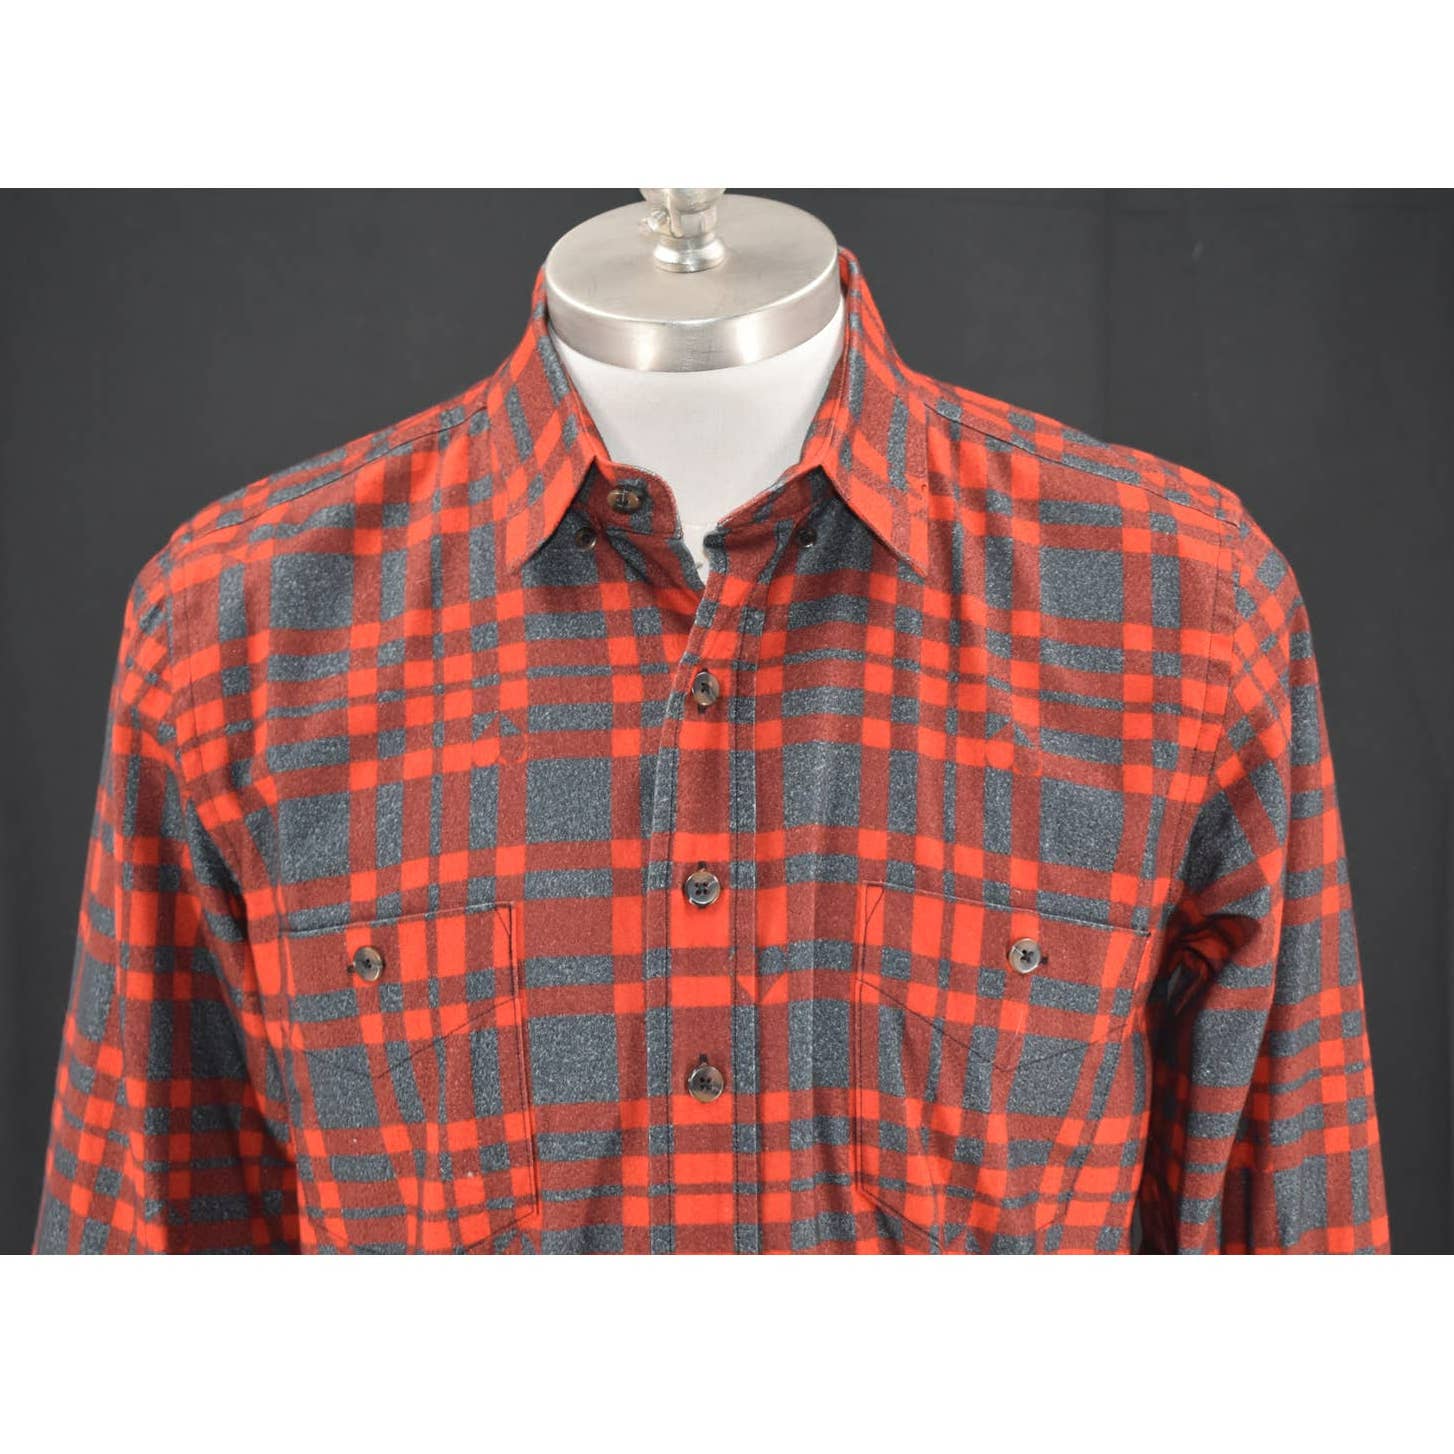 JCRT Red Gray Plaid Button Up Flannel Shirt #Portland - S